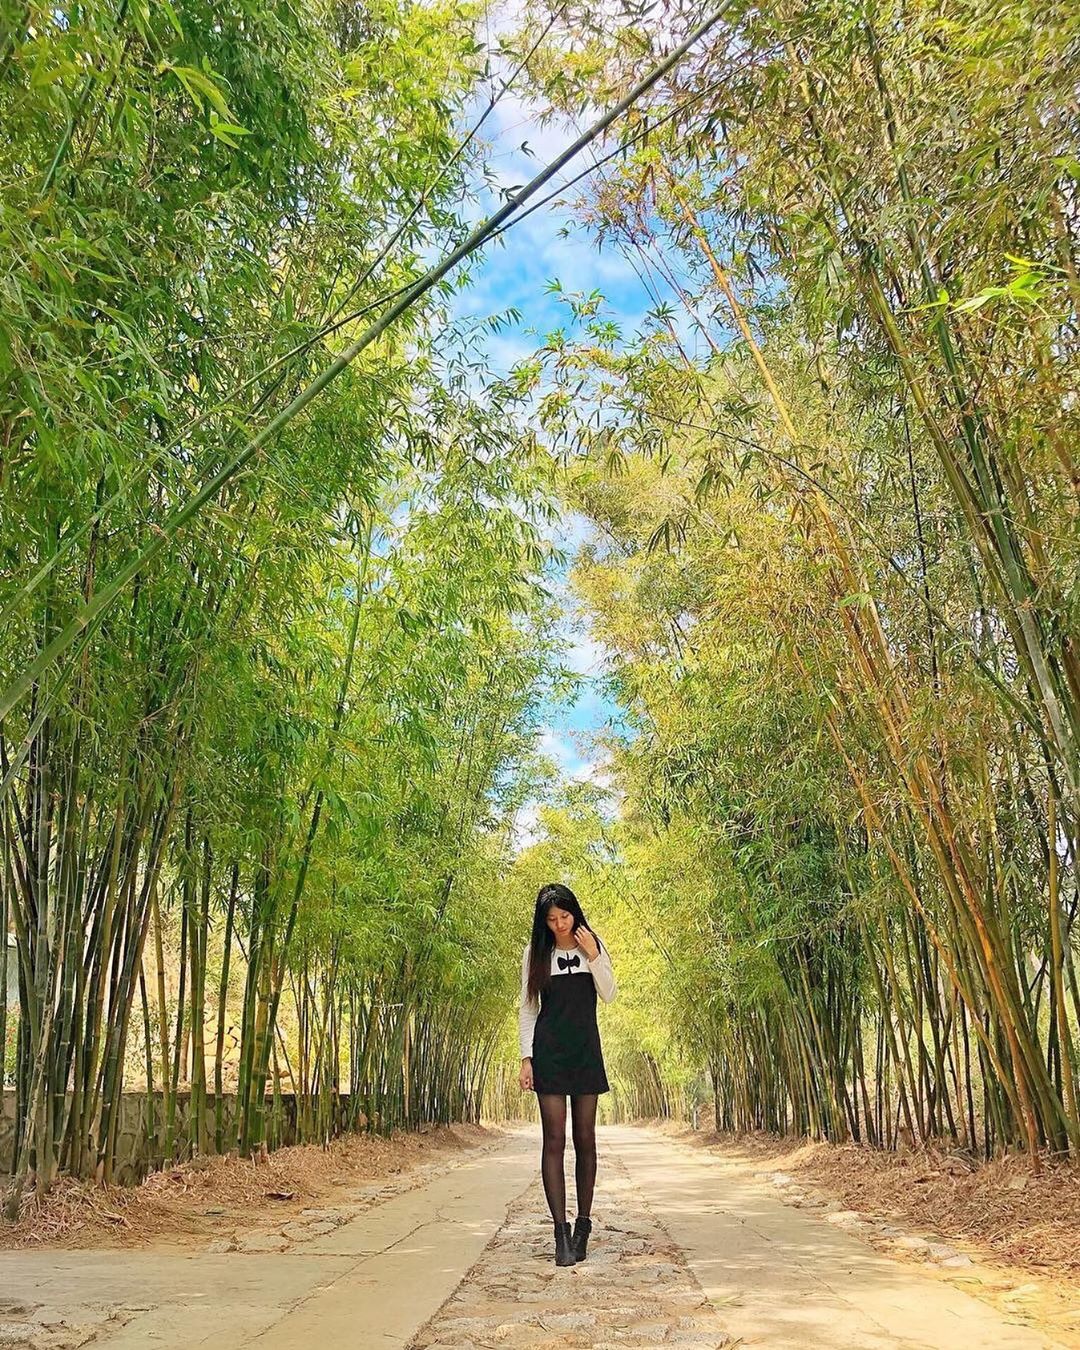 Blend with the green at bamboo forest 

被翠綠的竹林包圍，頓時覺得無憂無慮忘卻塵世煩憂～彷...